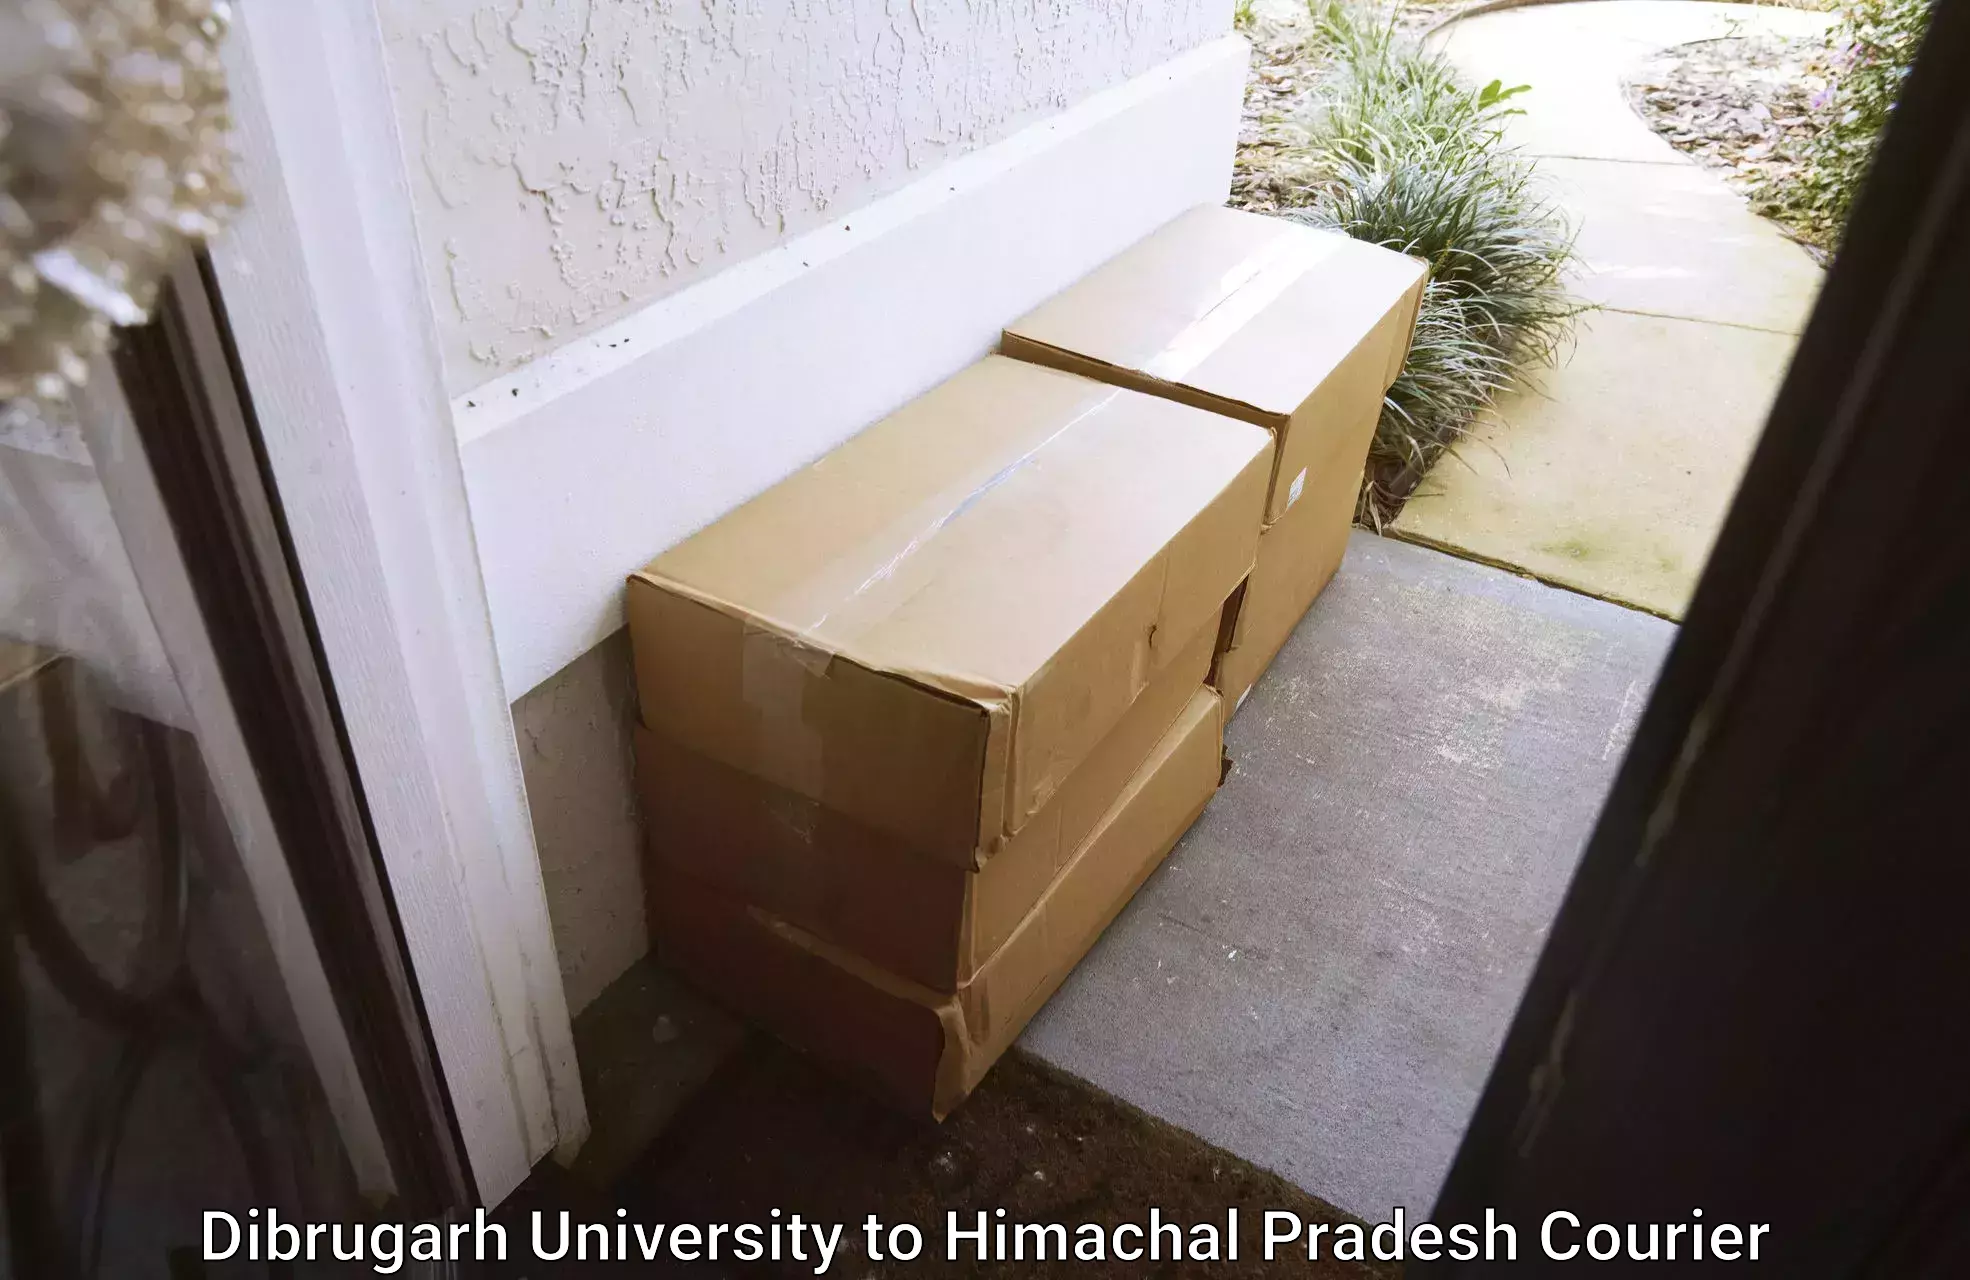 Parcel handling and care Dibrugarh University to Himachal Pradesh